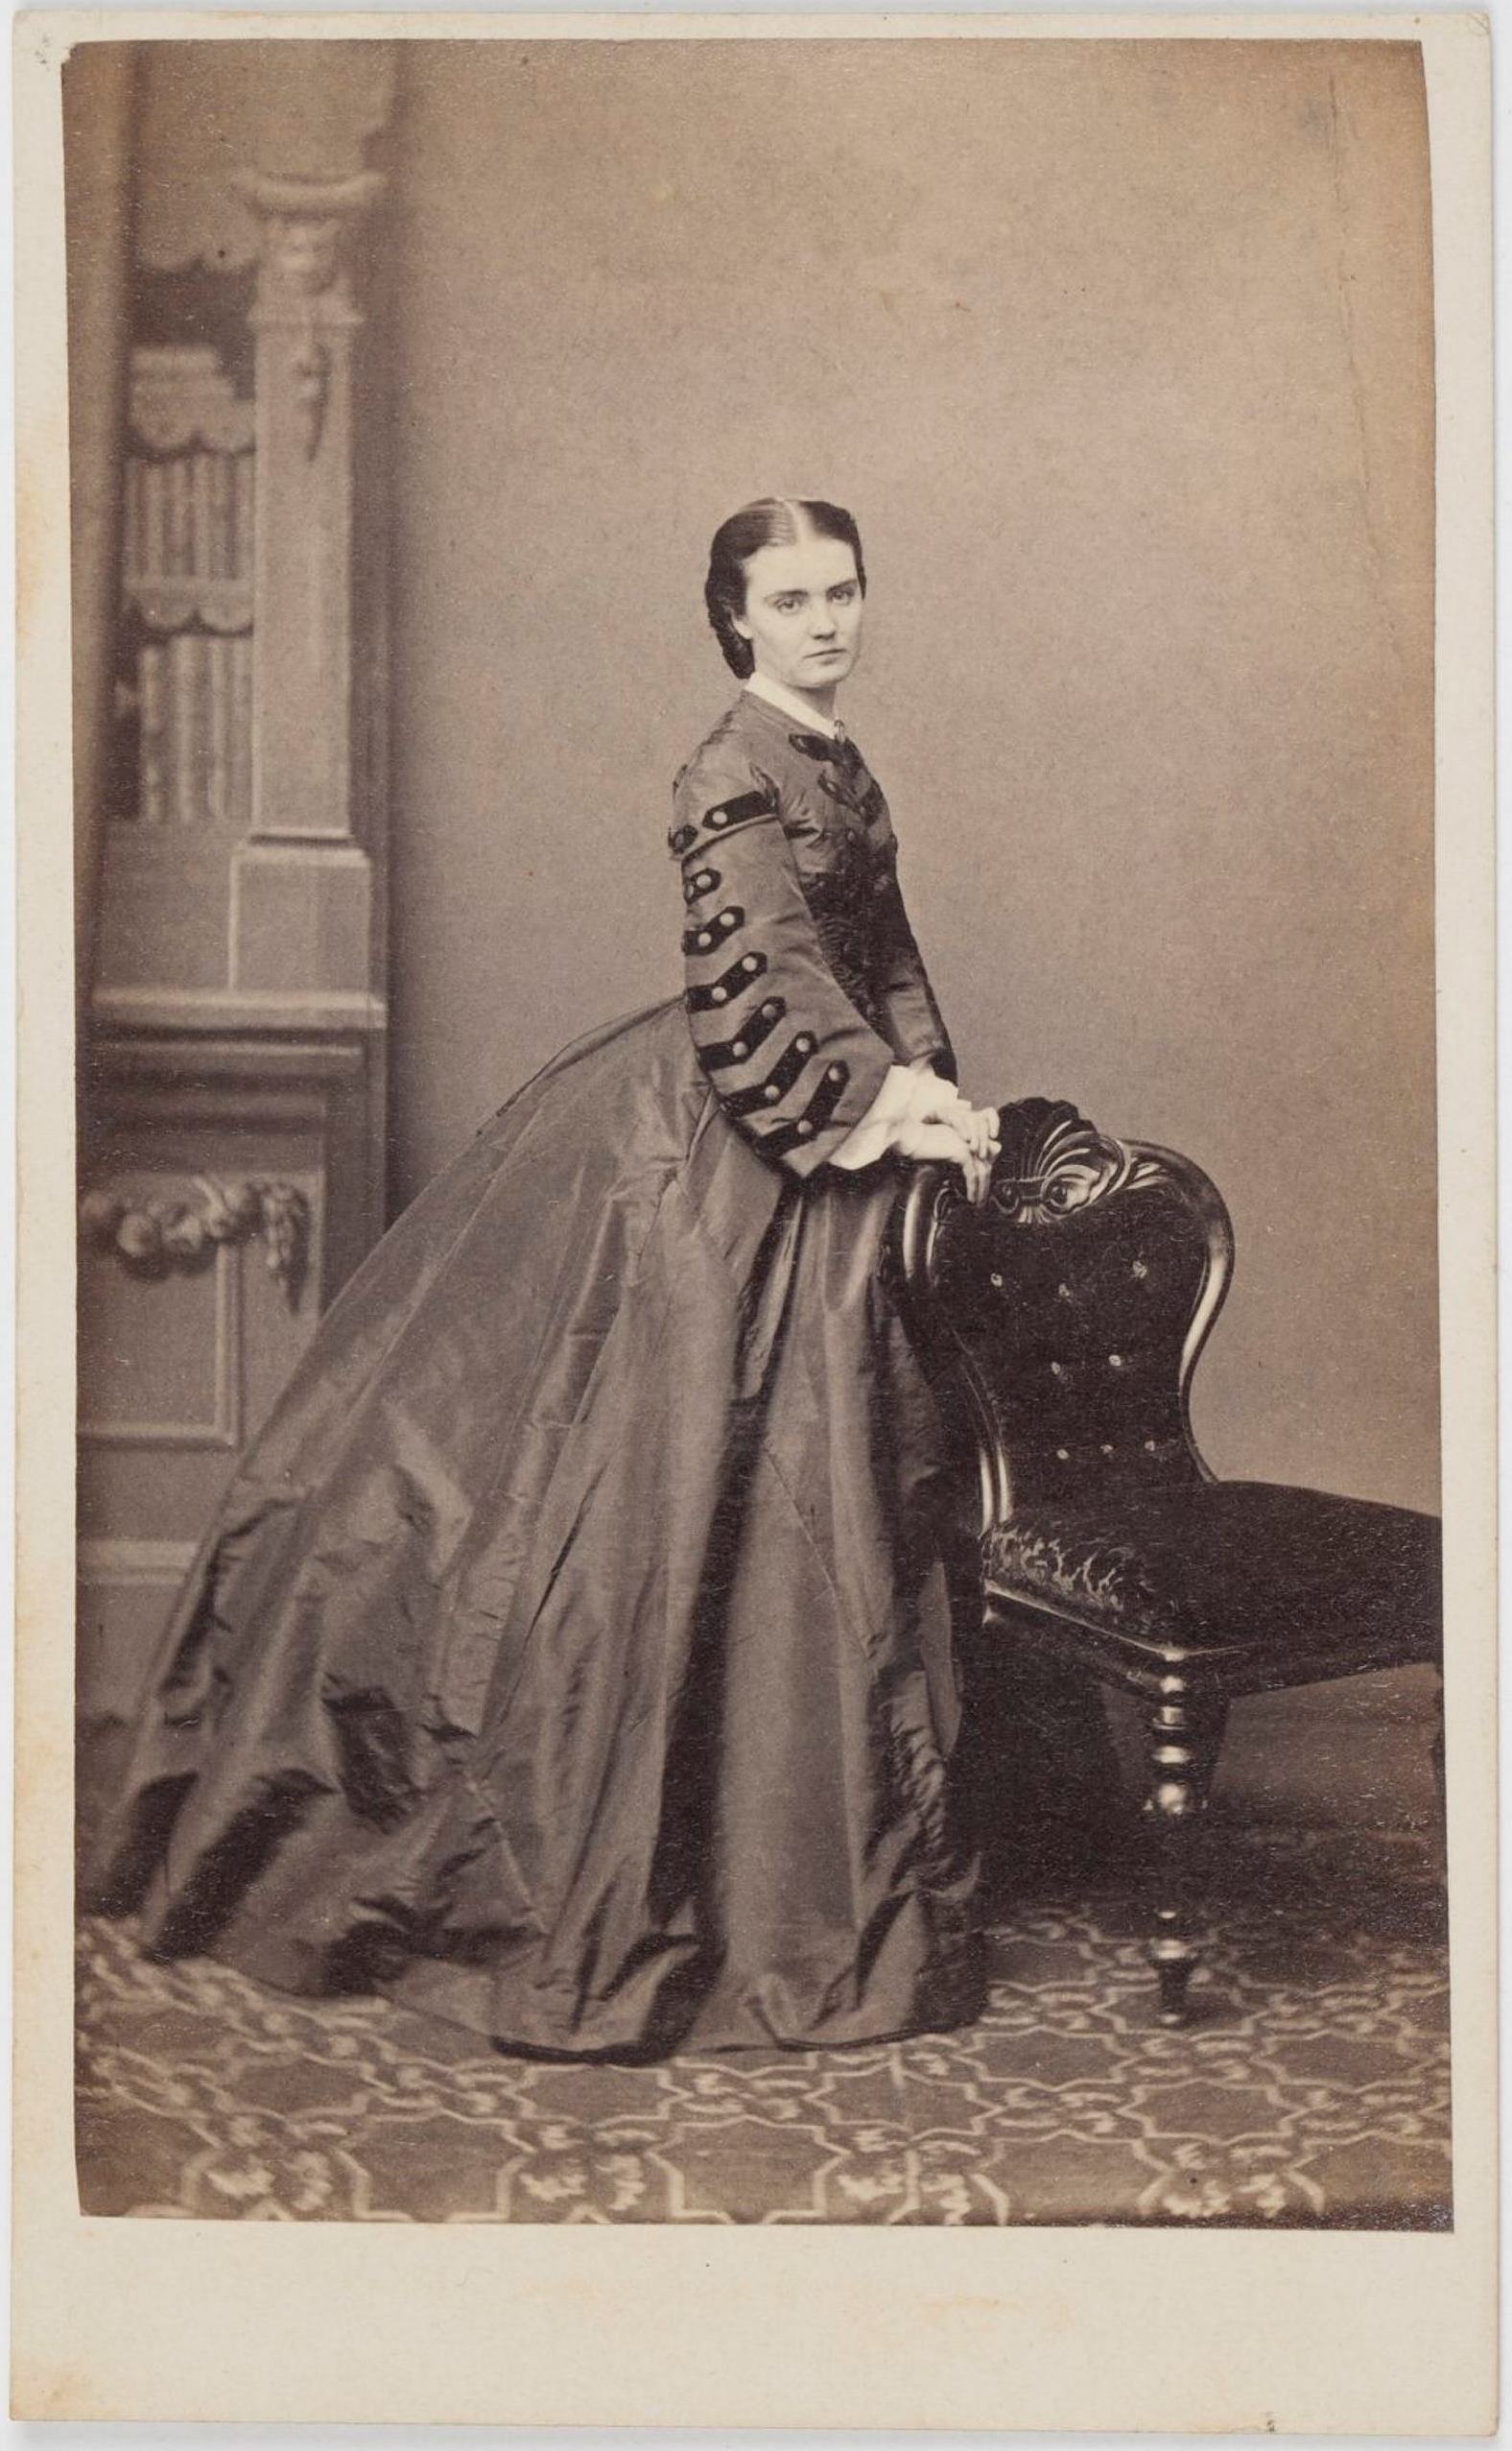 Phoebe Rouse (1847-1931), around 1866 / Dalton's Royal Photographic Gallery, Sydney